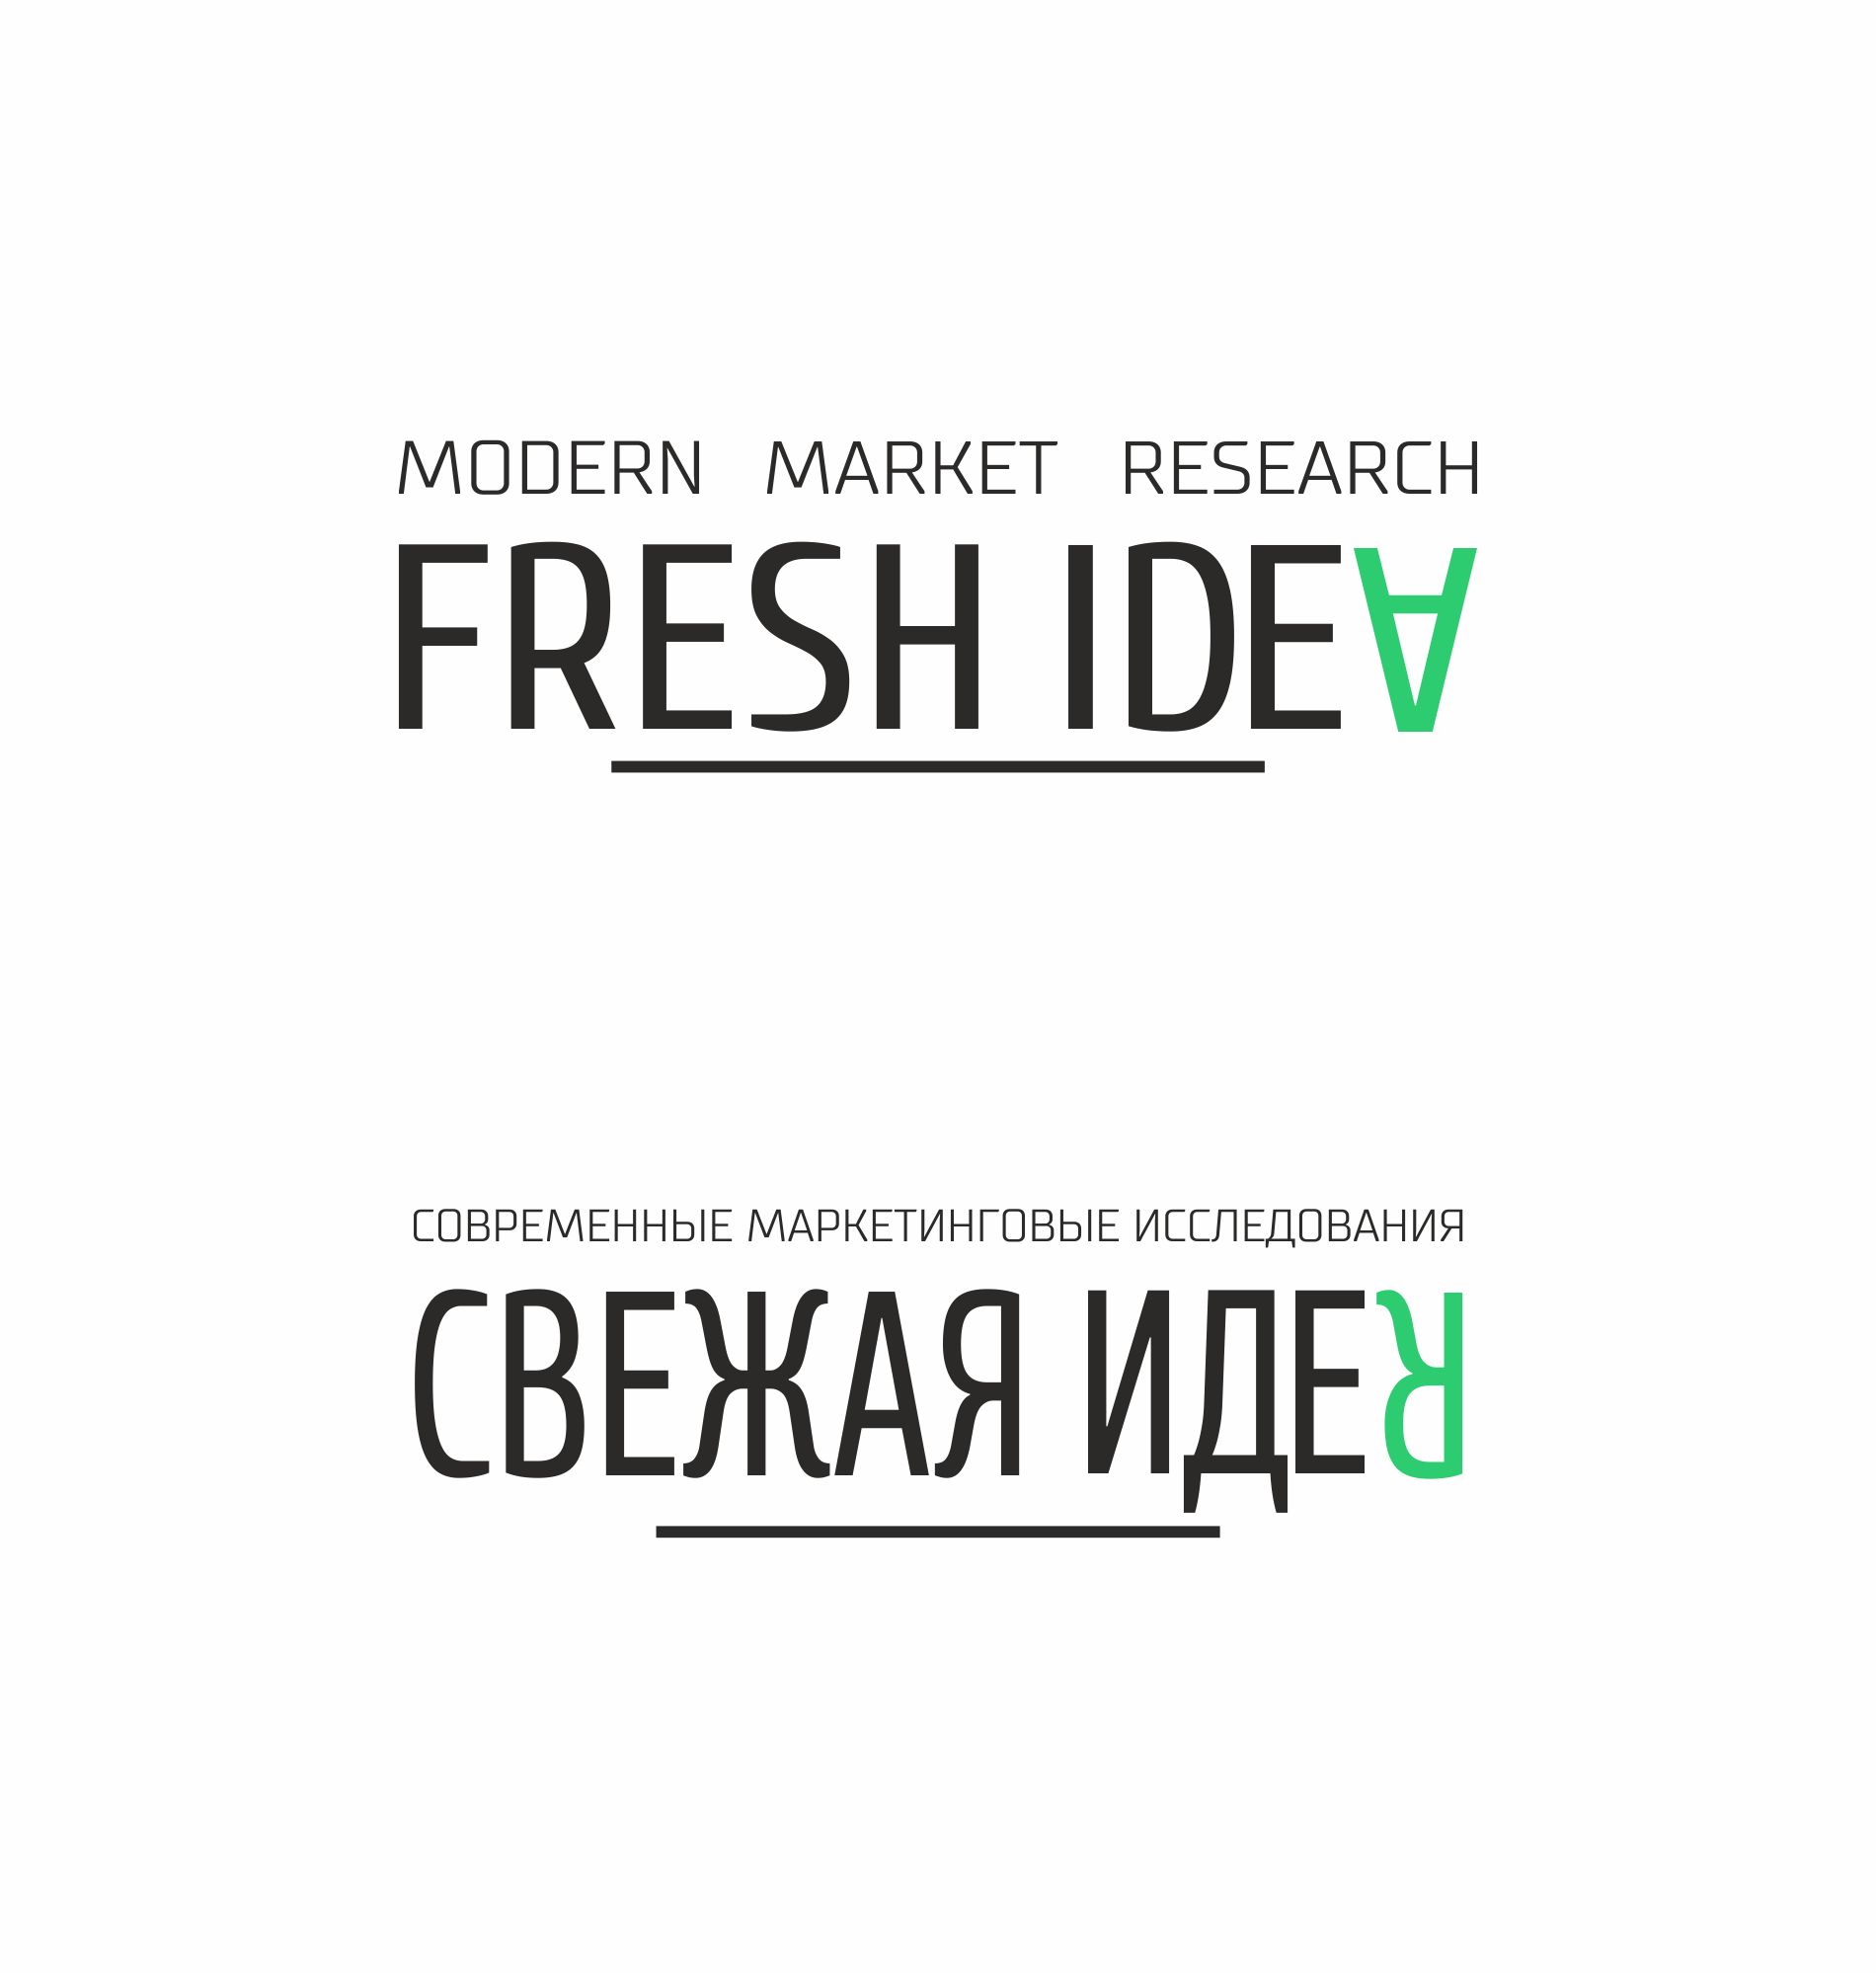 Fresh Idea modern market research - дизайнер IGOR-GOR